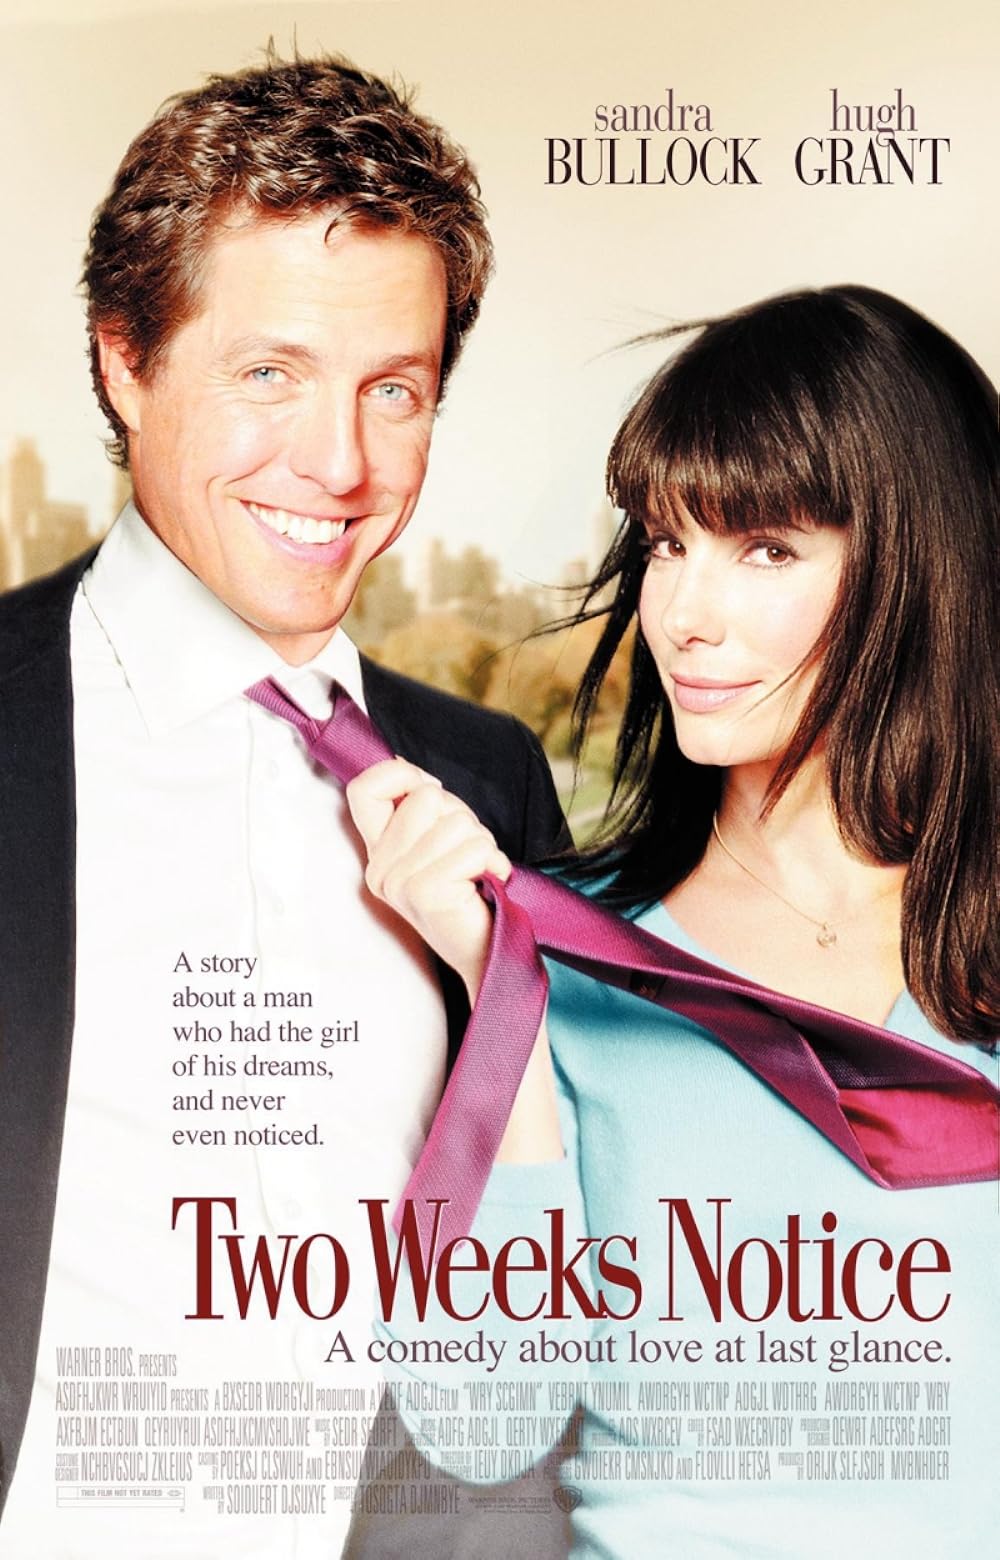 FULL MOVIE: Two Weeks Notice (2002)